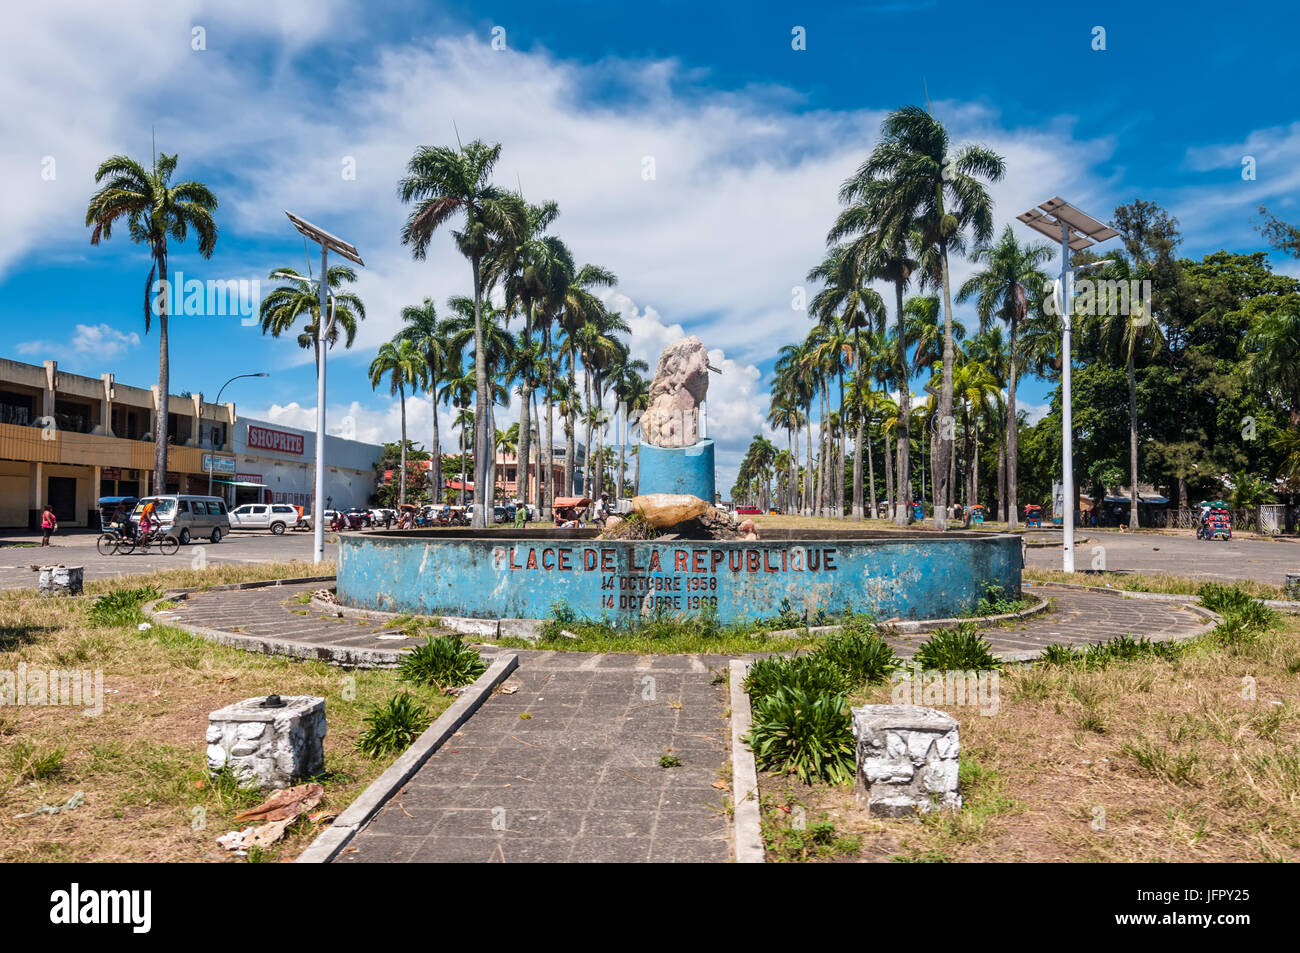 Toamasina, Madagascar - December 22, 2017: Republic Square (Place de la Republique) in Toamasina (Tamatave), Madagascar, East Africa. People in Madaga Stock Photo